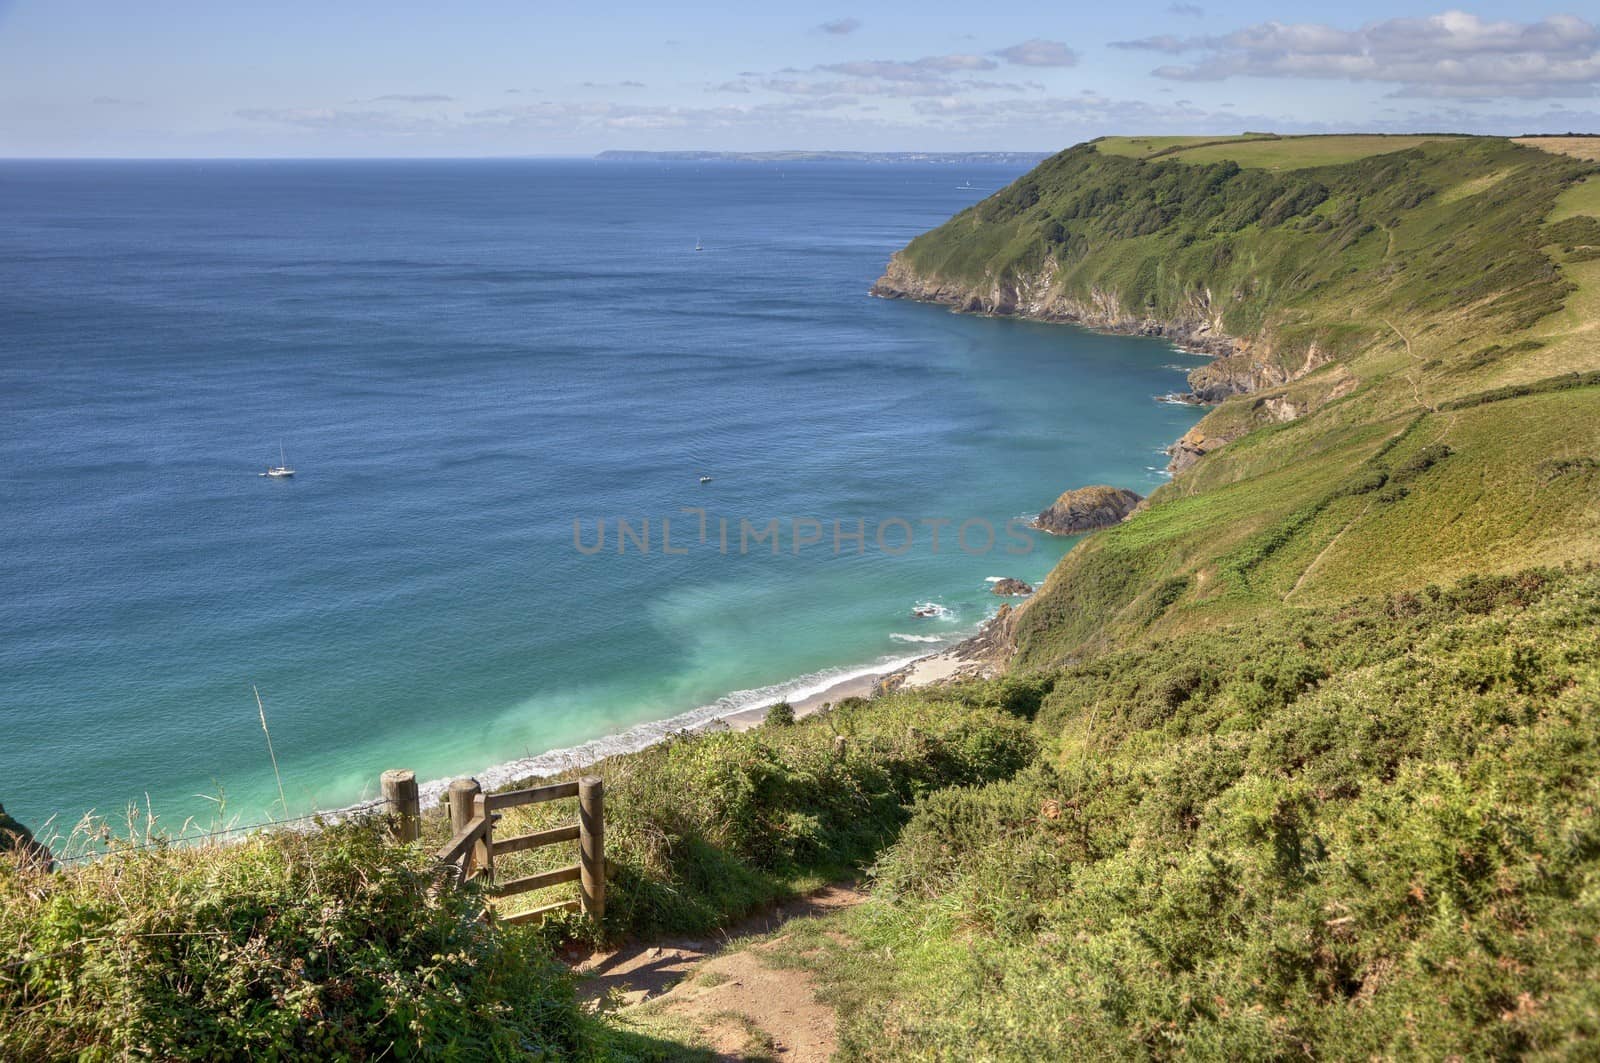 Overlooking the emerald sea at Lantic Bay, Cornwall, England.